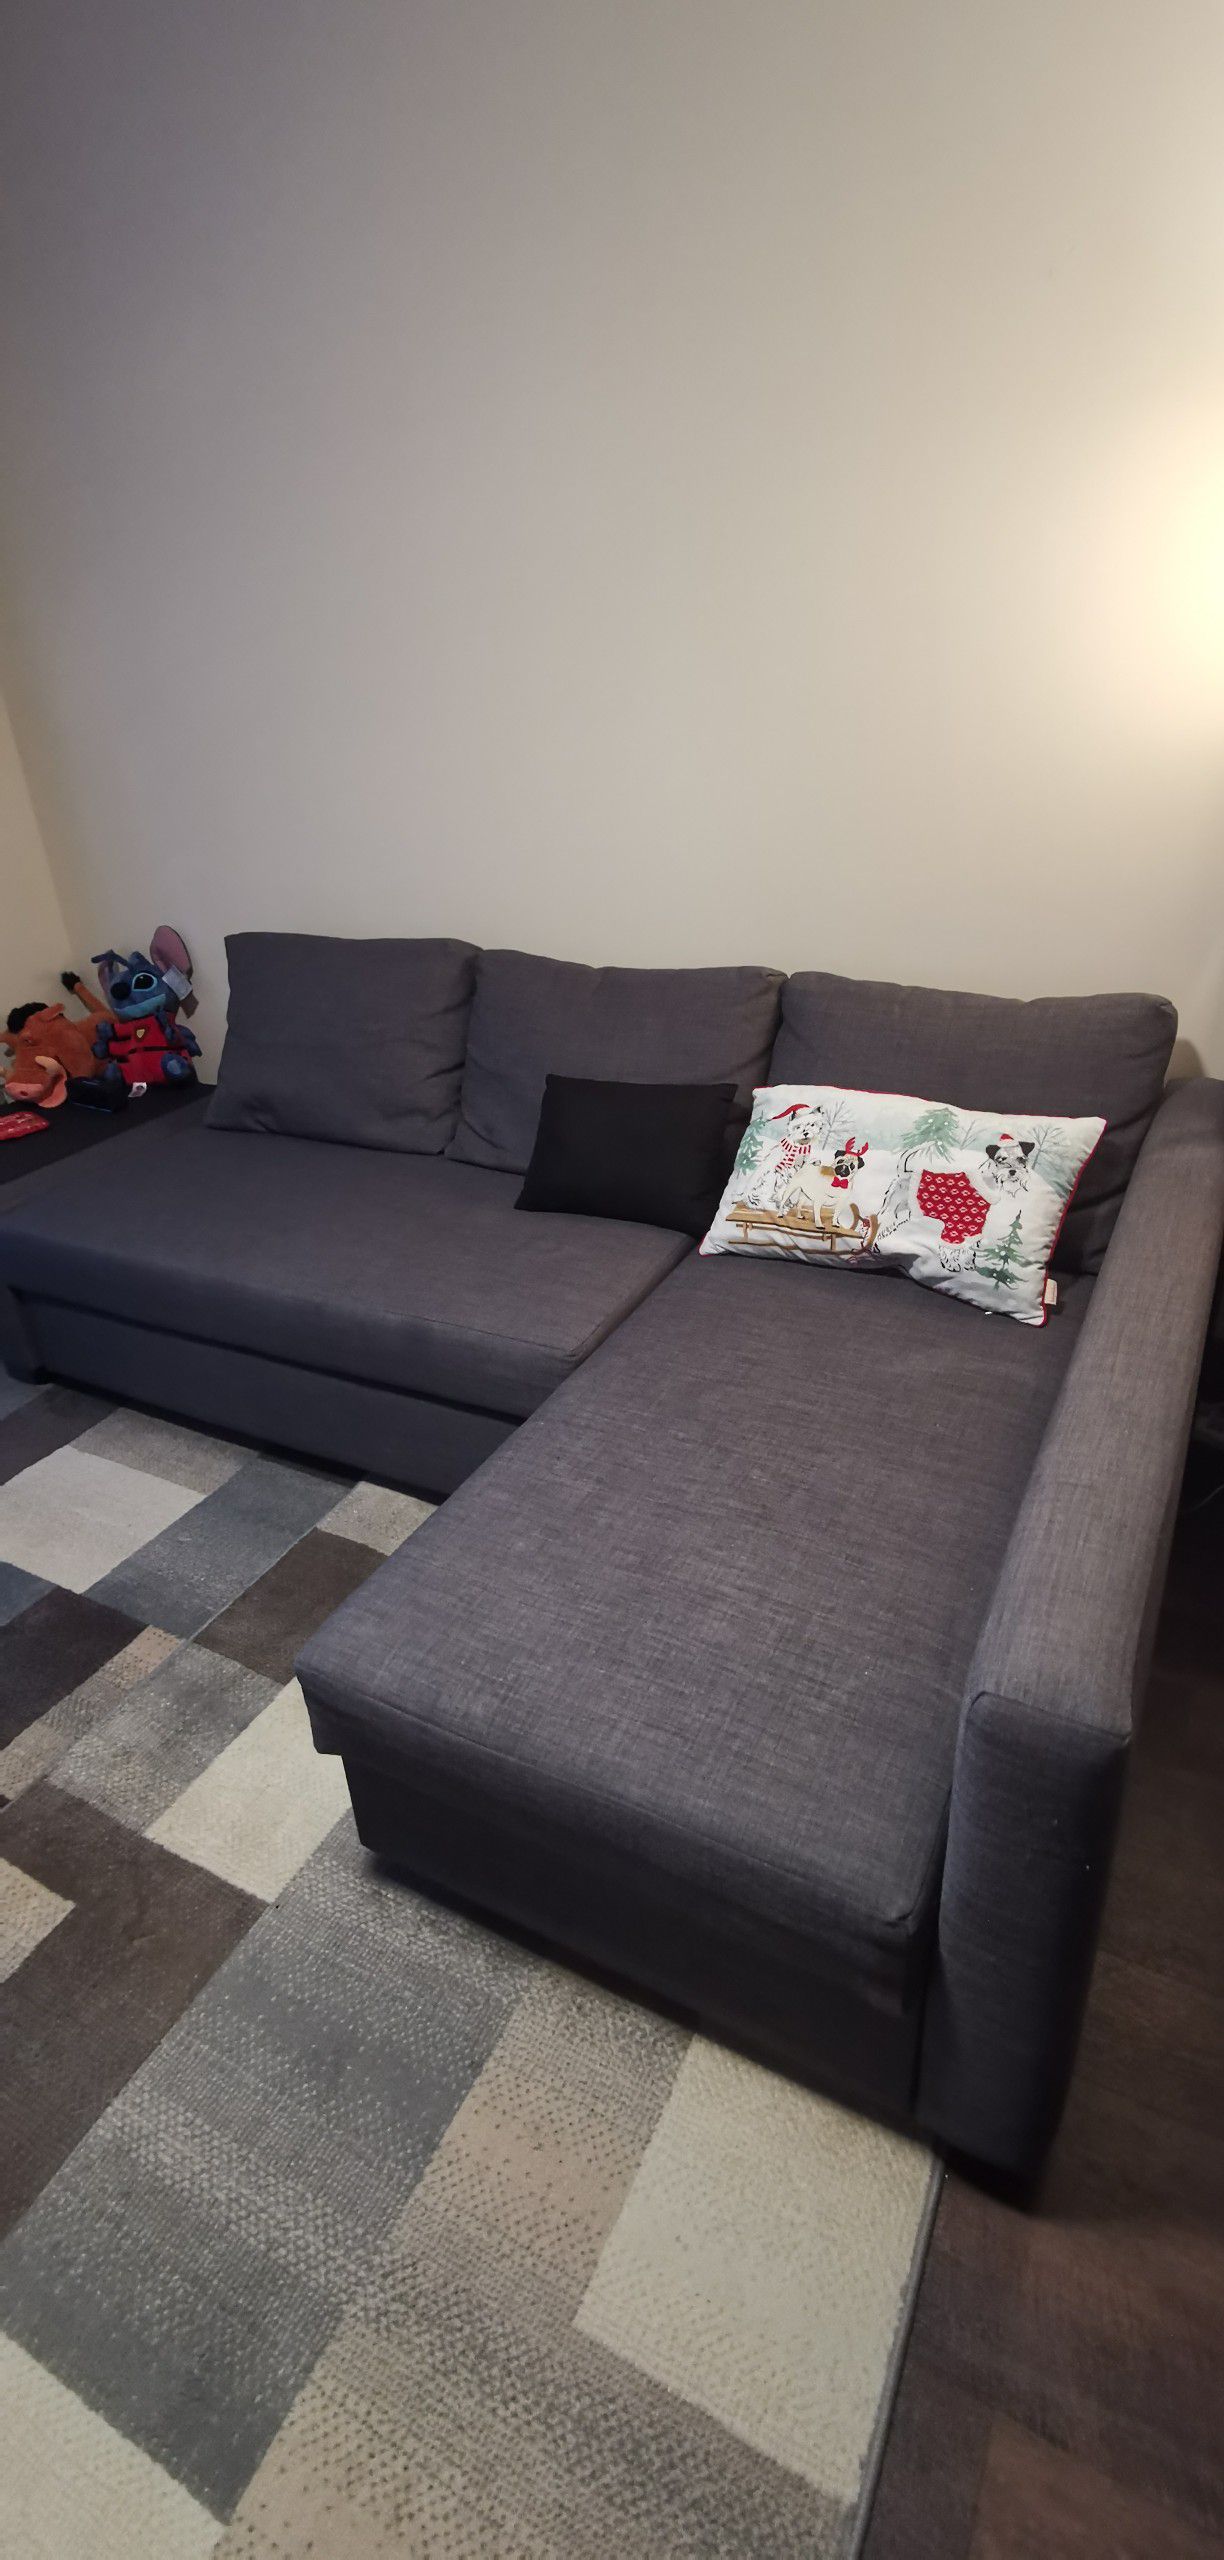 IKEA Friheten sleeper sectional couch